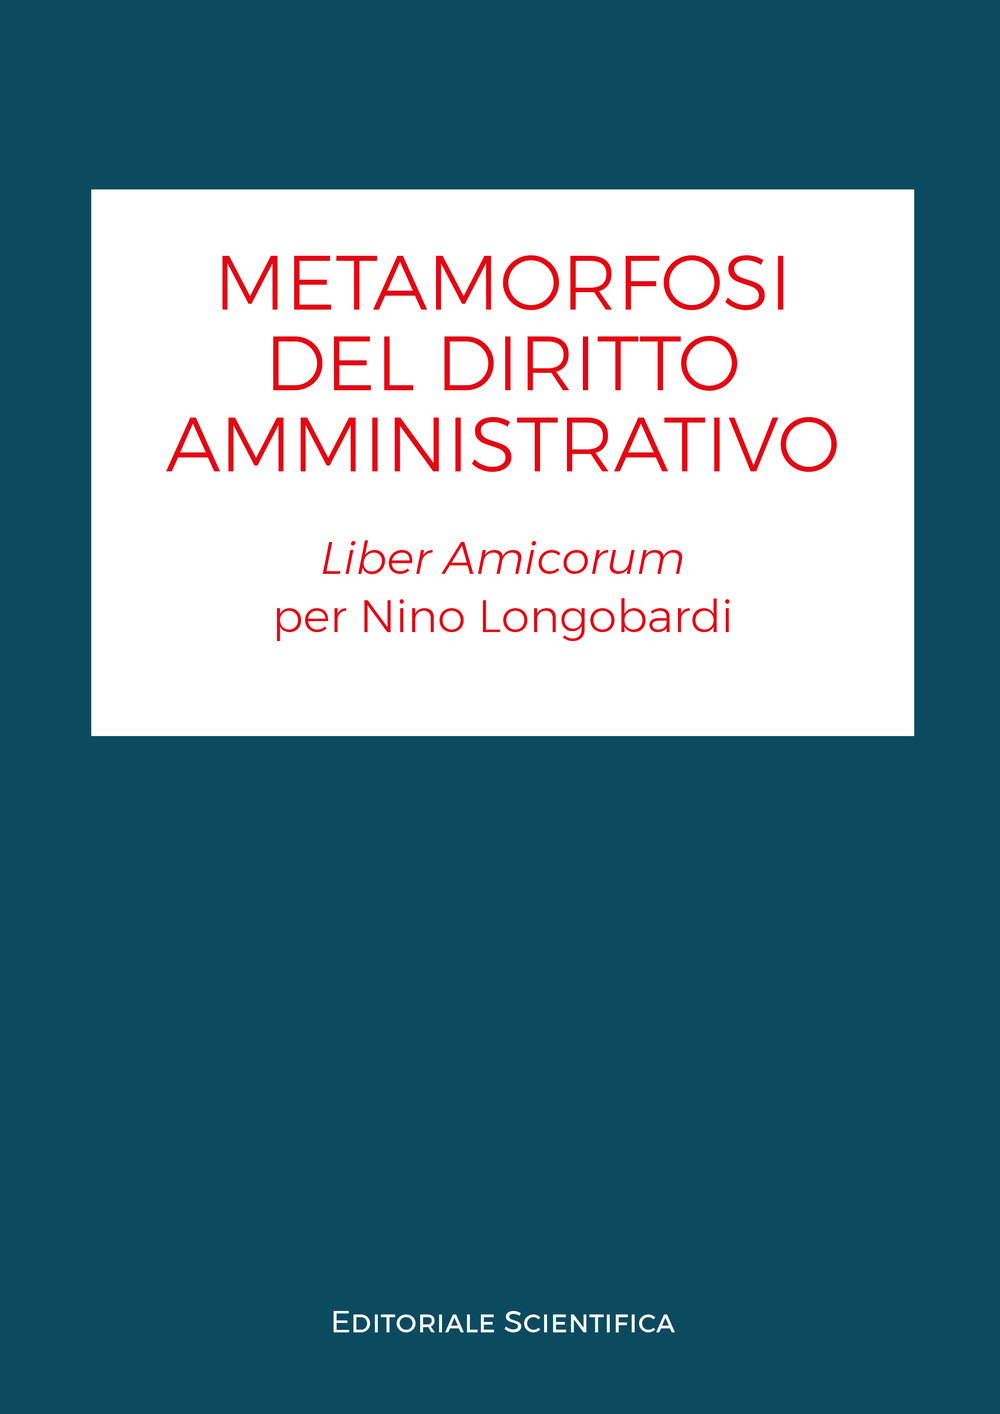 Metamorfosi del diritto amministrativo. Liber amicorum per Nino Longobardi